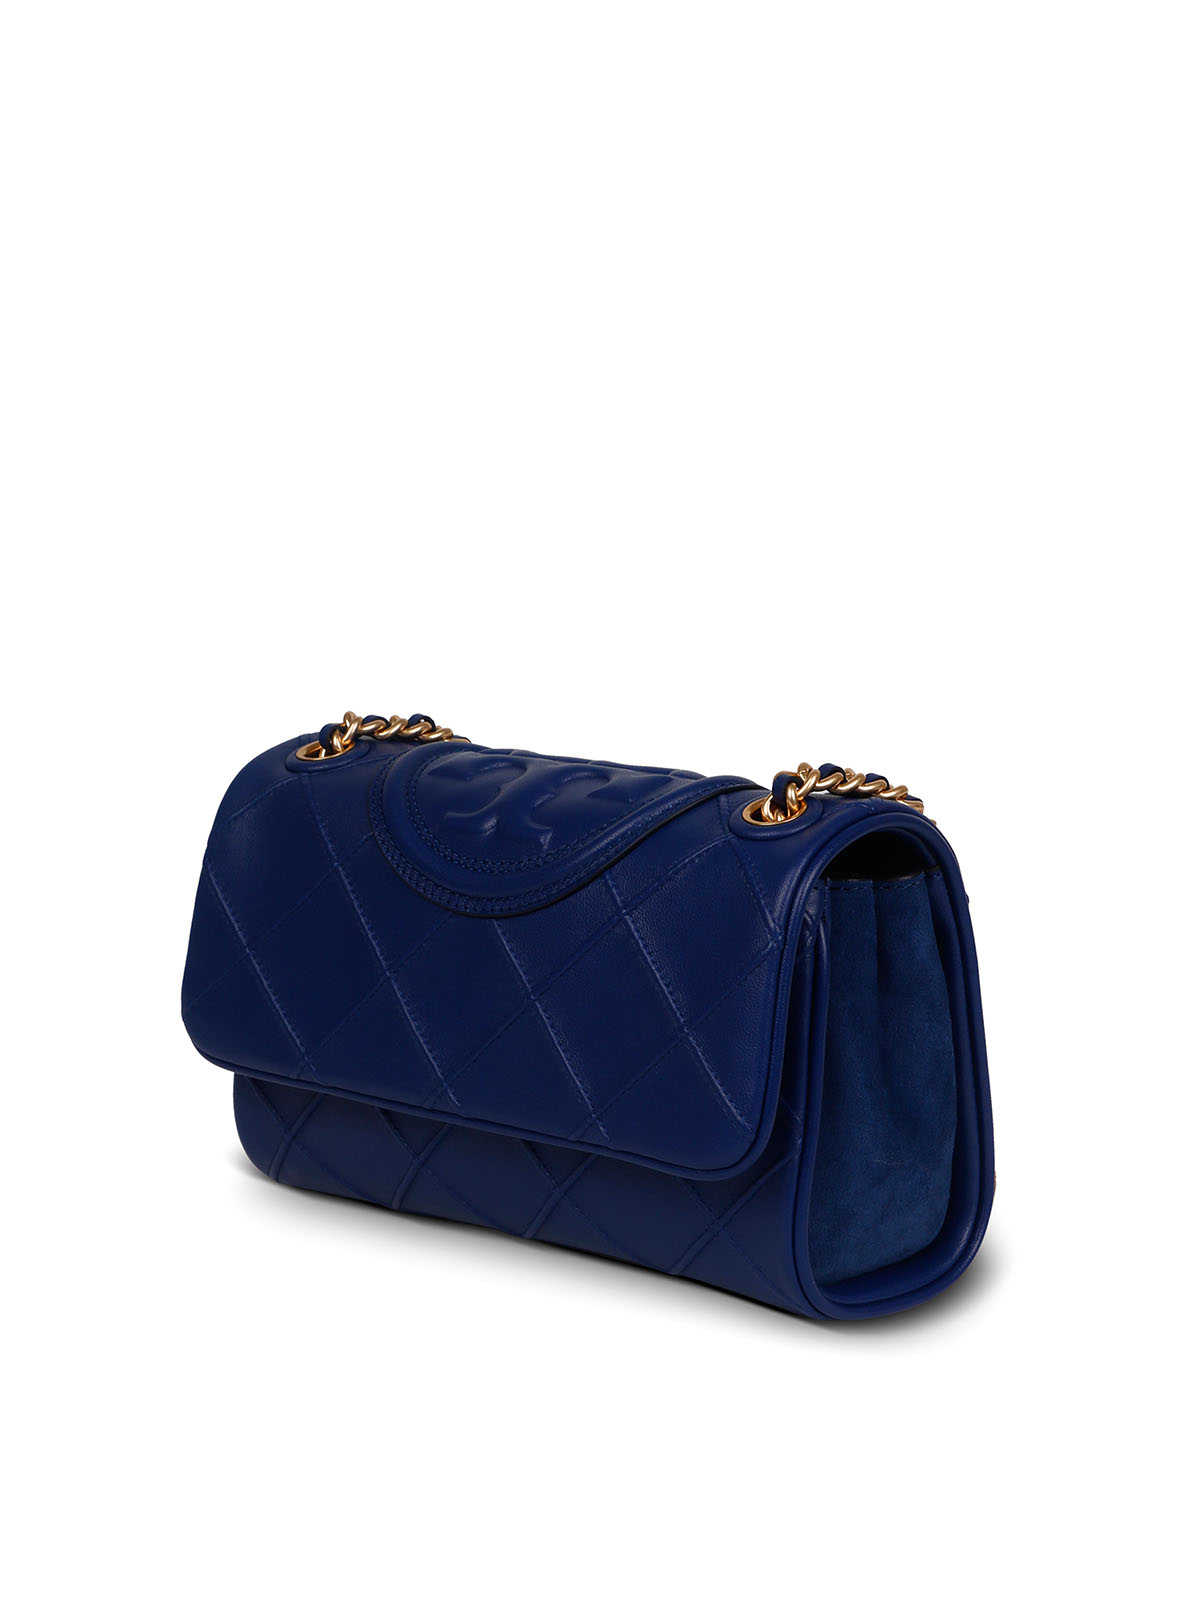 Handbag Designer By Tory Burch Size: Medium